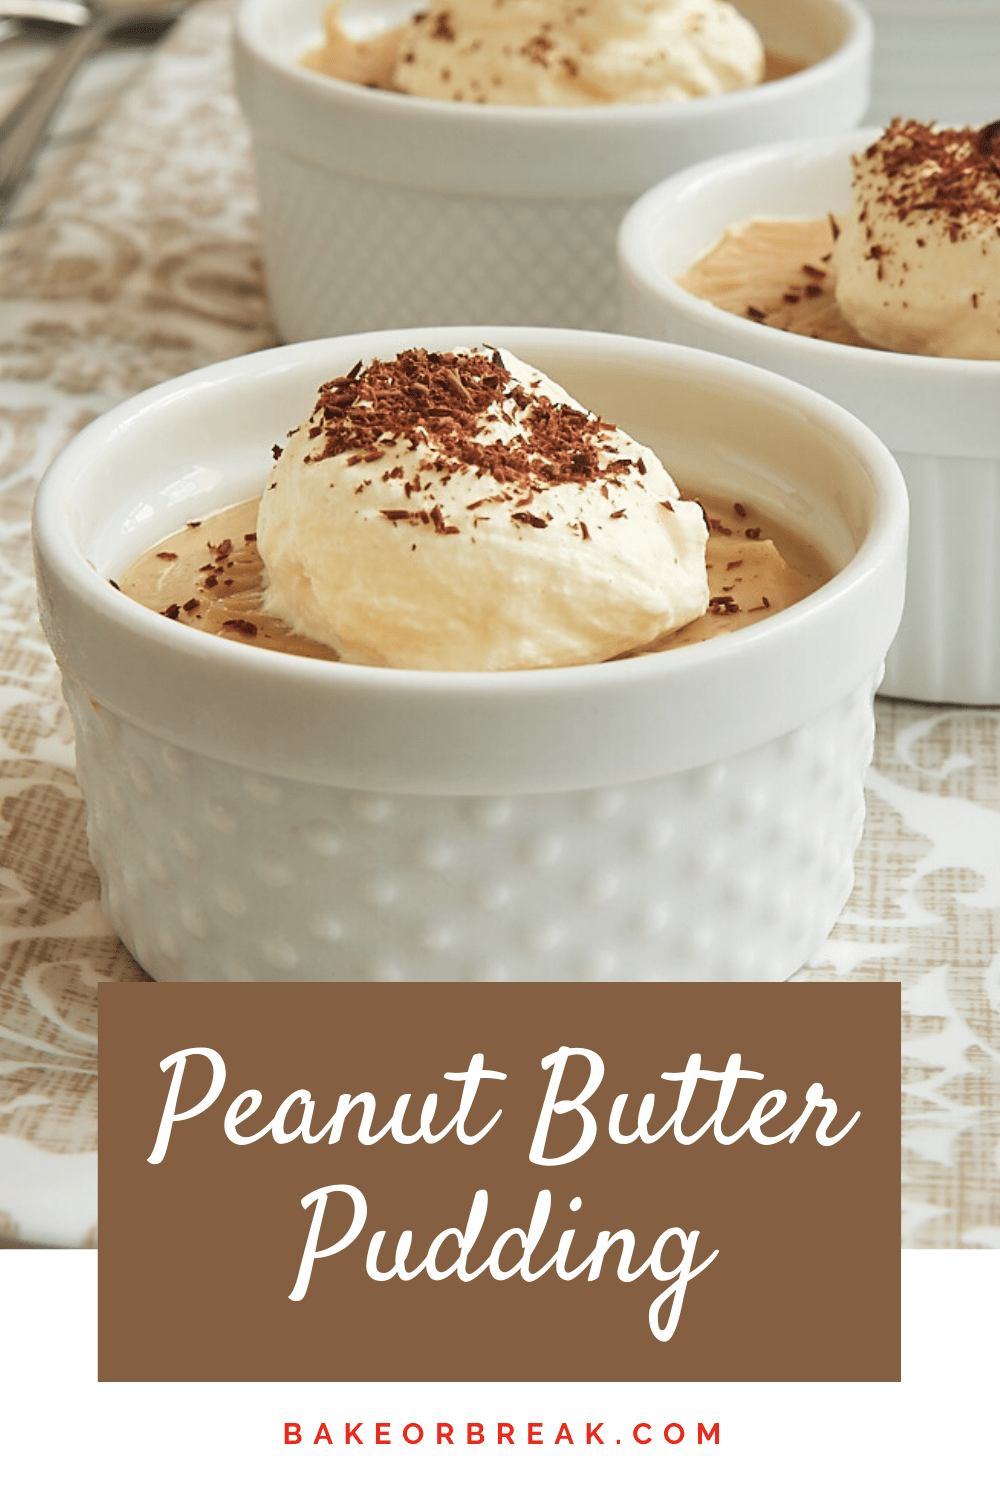 Peanut Butter Pudding bakeorbreak.com